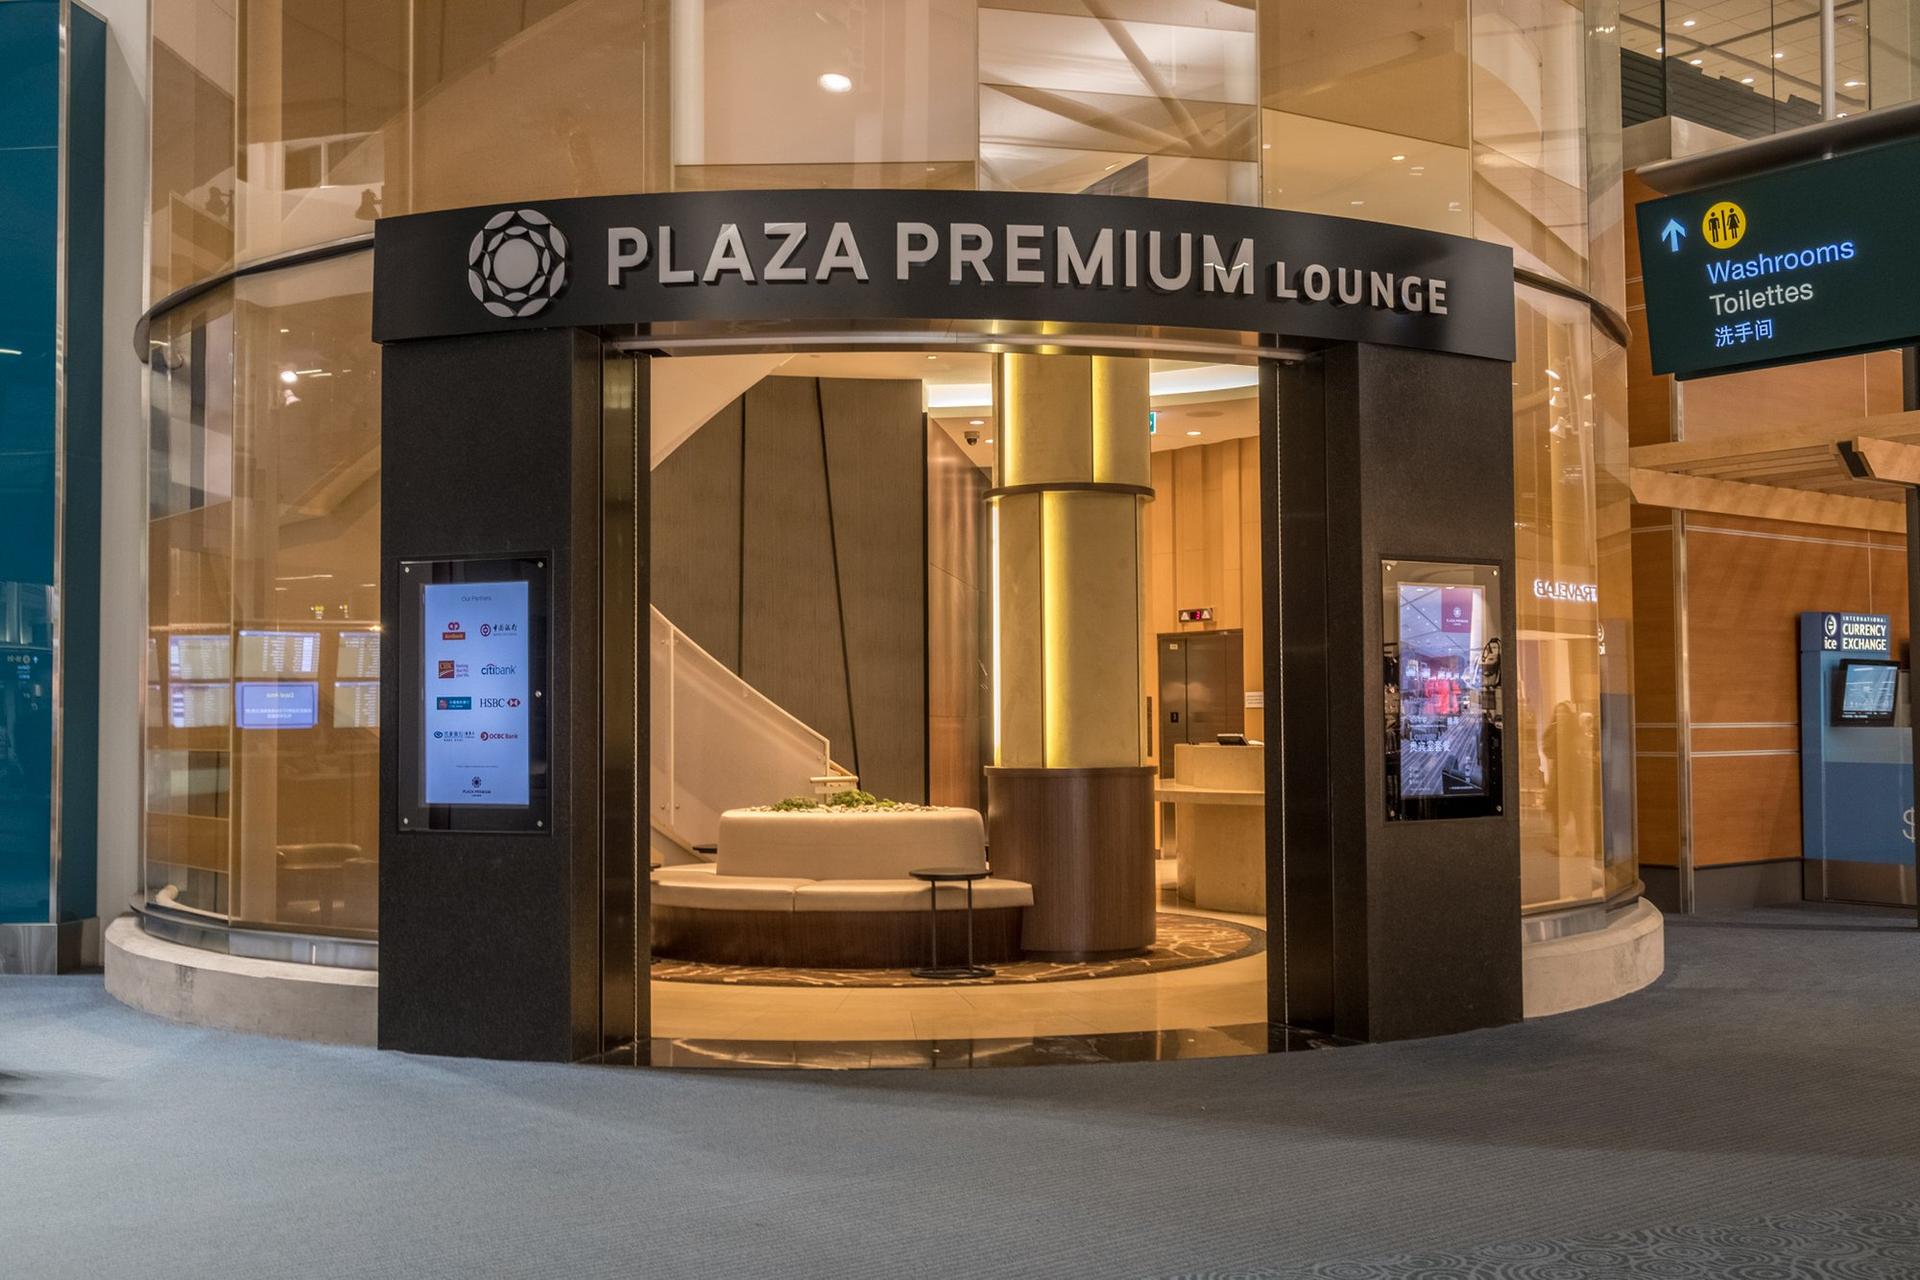 Plaza Premium Lounge (Domestic Gate B15) image 42 of 72